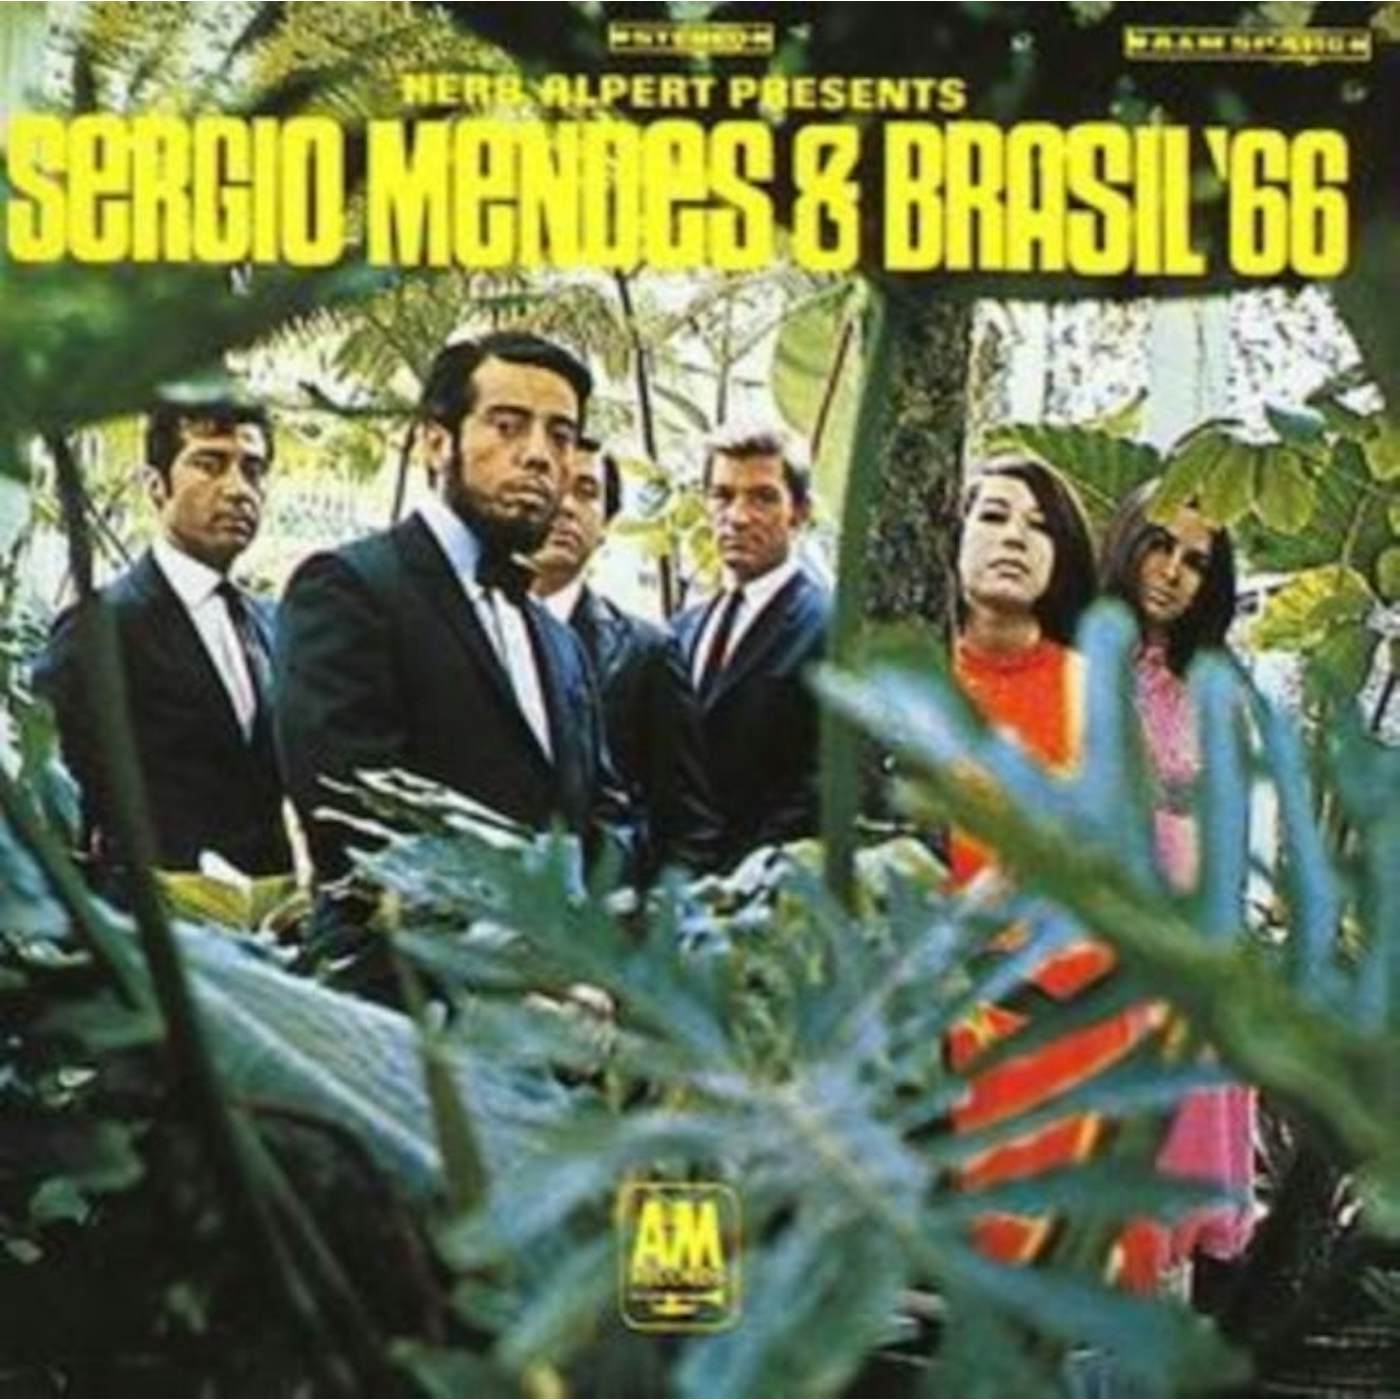 Sergio Mendes & Brasil '66 CD - Herb ALP Vinyl Recordert Present